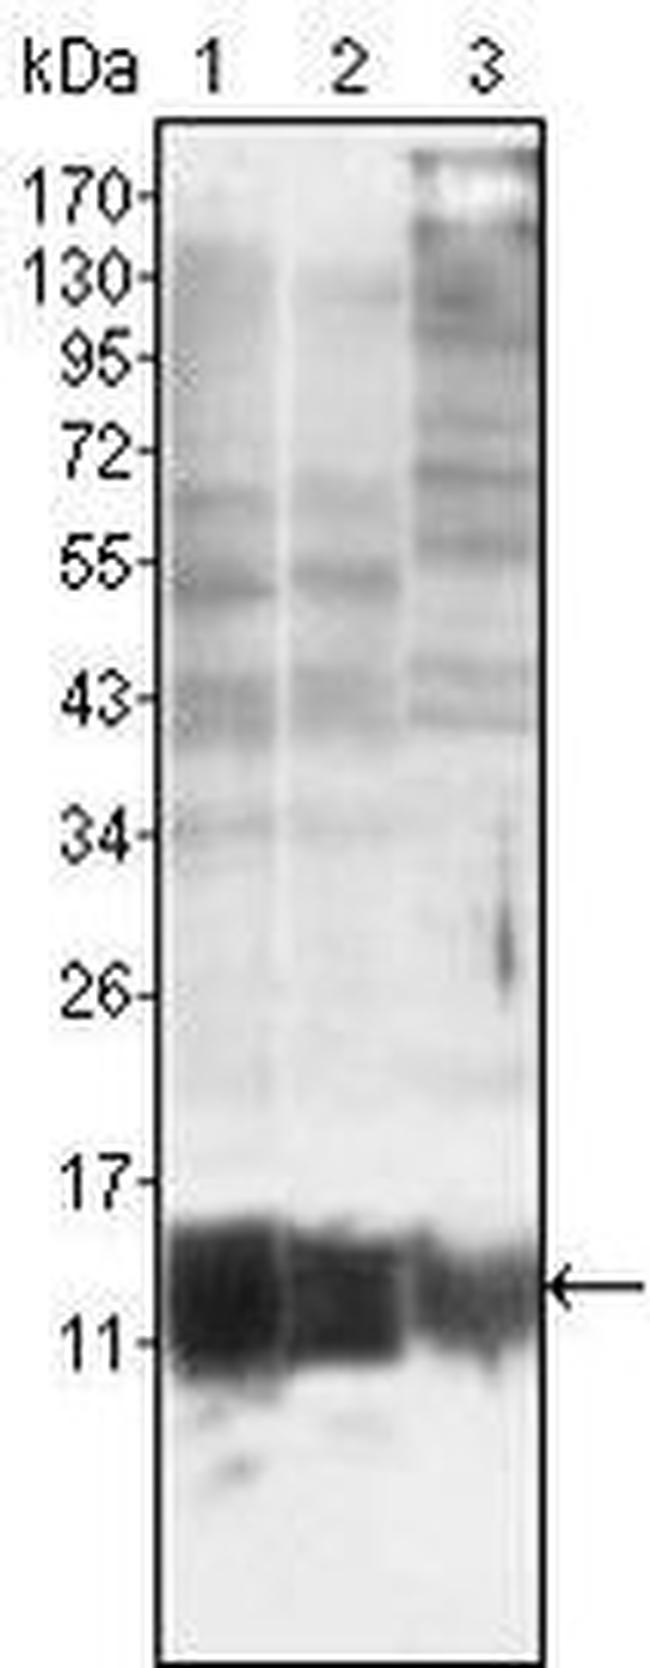 S100A10 Antibody in Western Blot (WB)